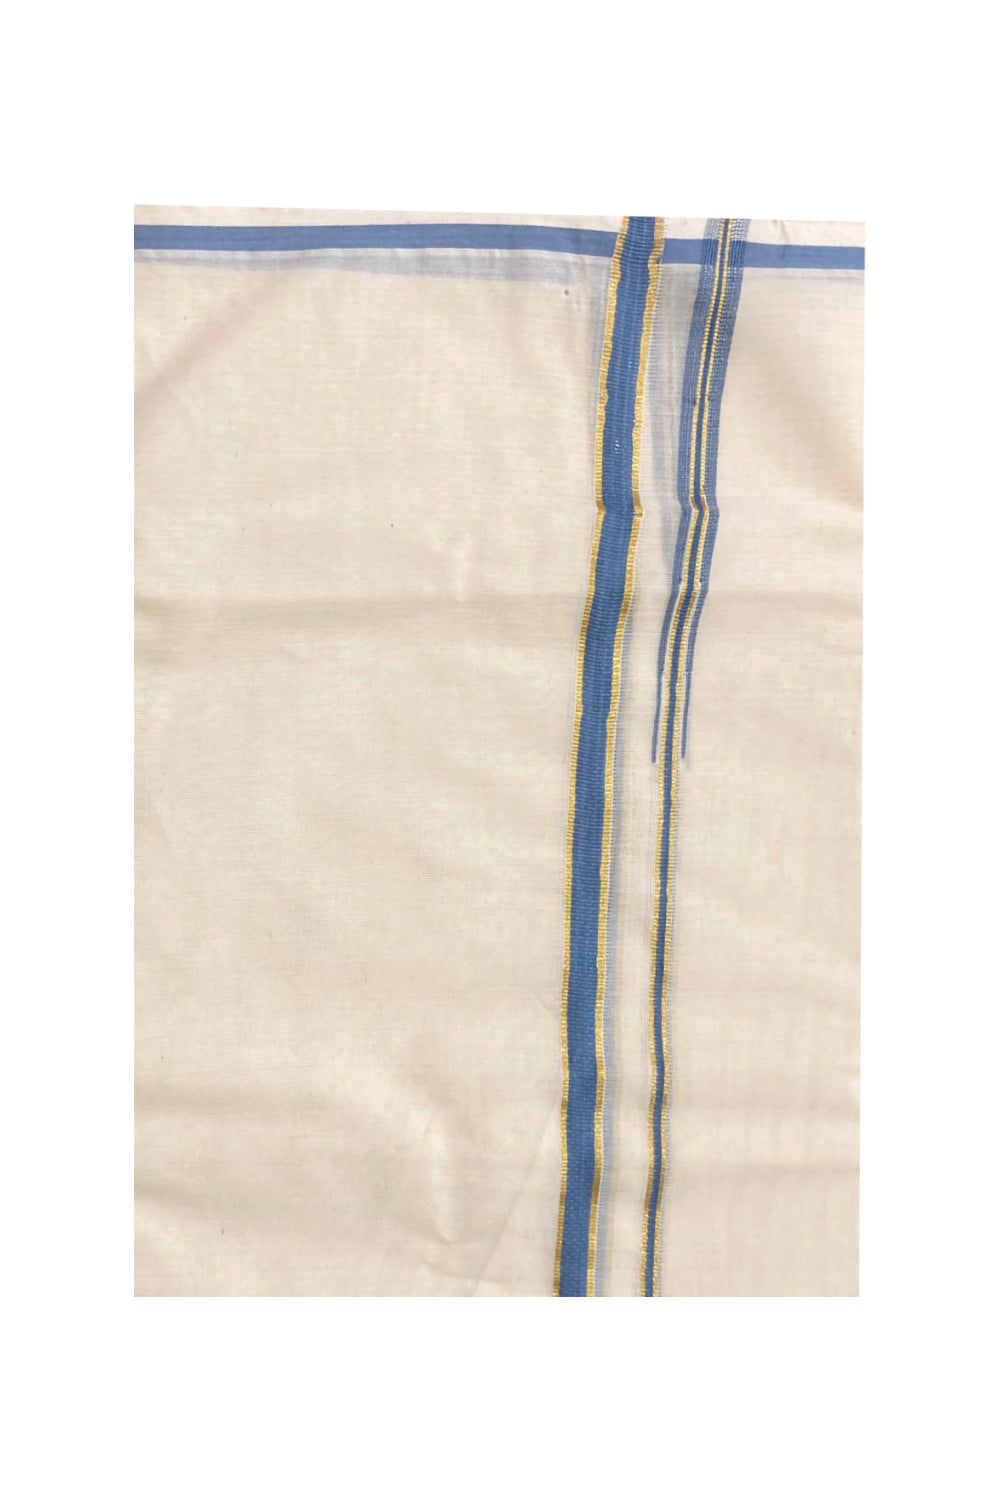 Off White Cotton Mundu with Greyish Blue and Puliyilakkara Kasavu (South Indian Dhoti)